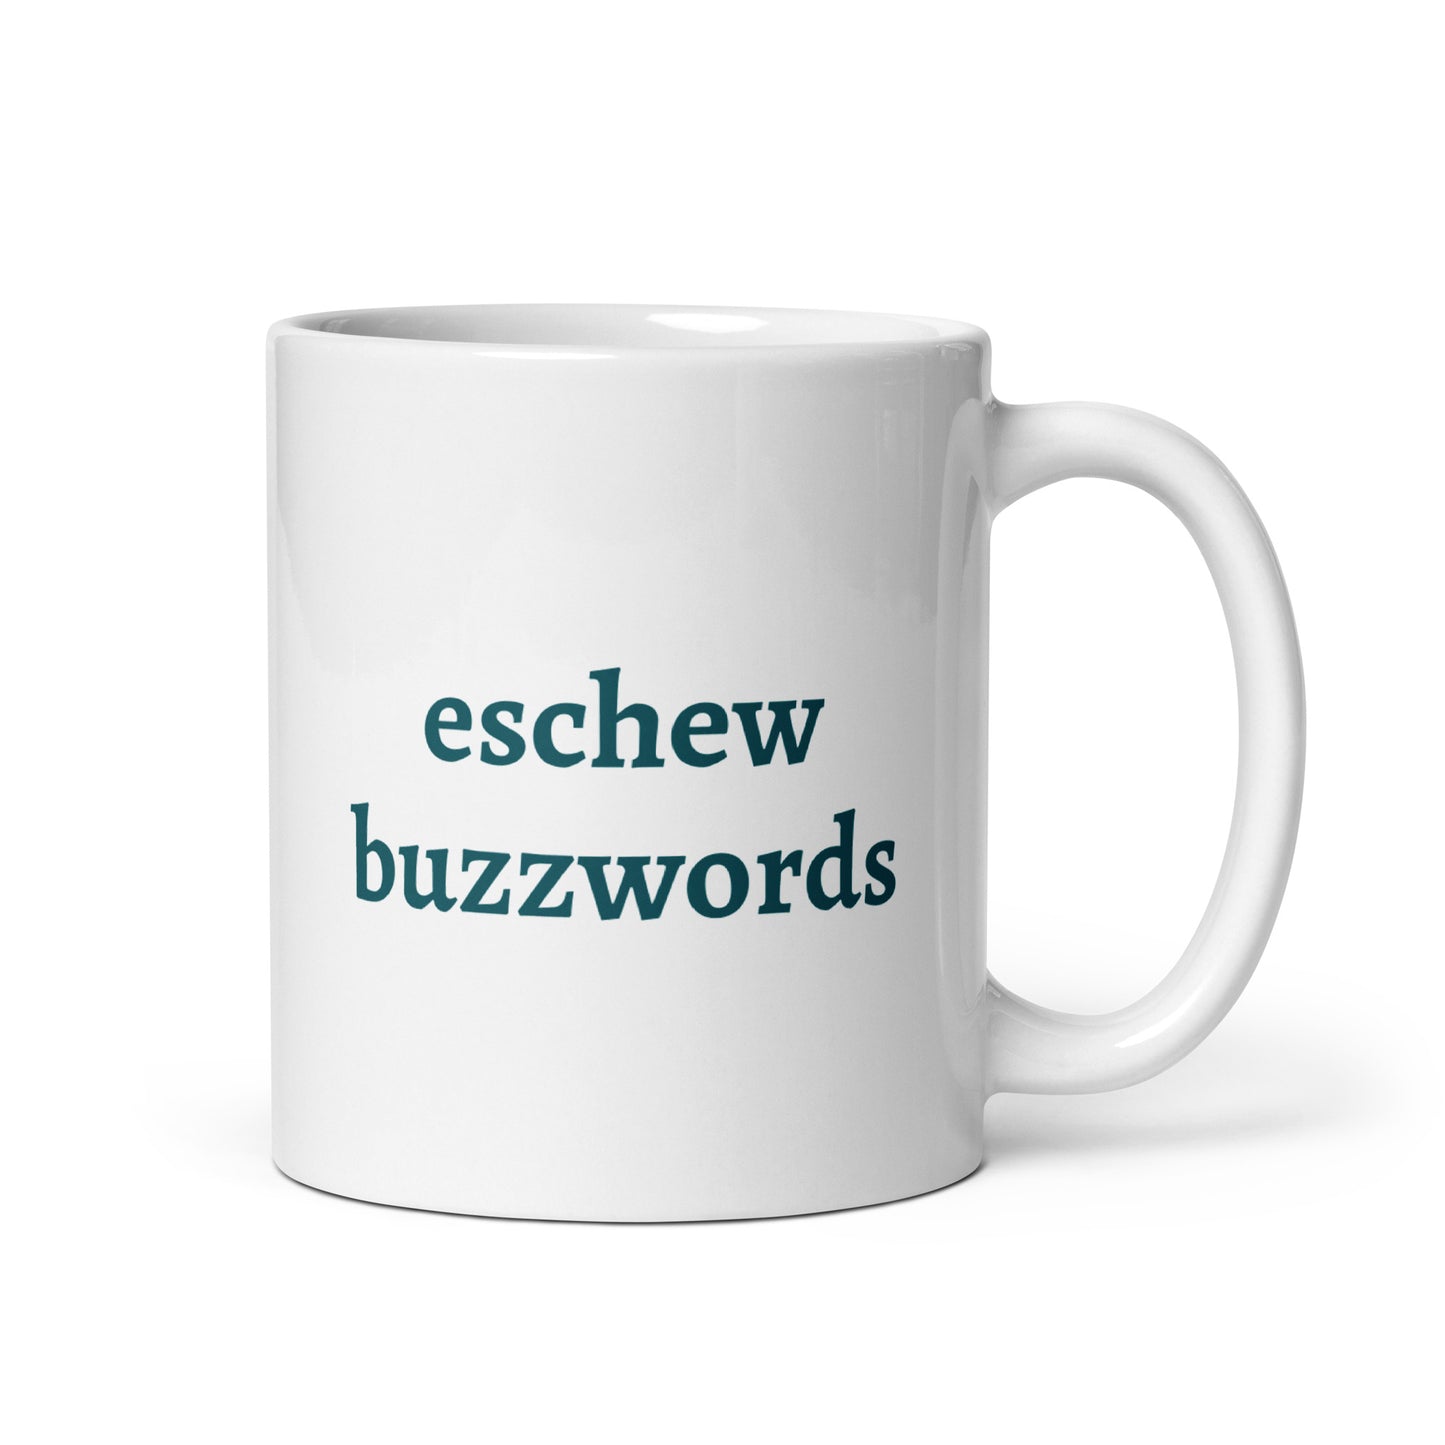 eschew buzzwords white glossy mug